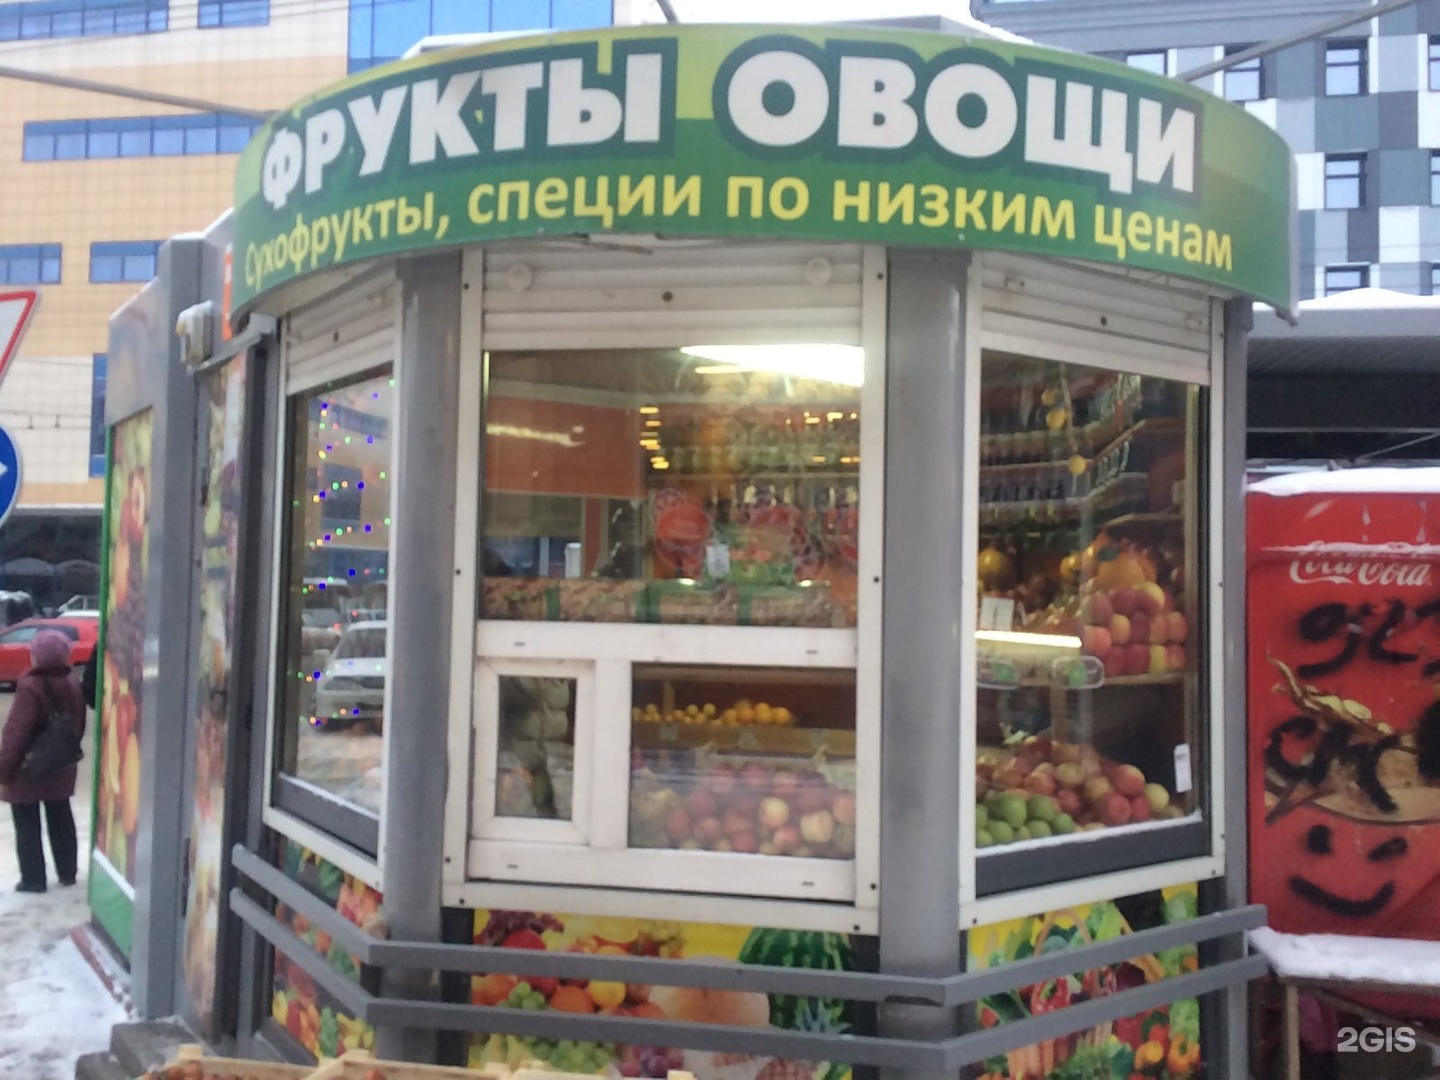 Куплю овощи новосибирск